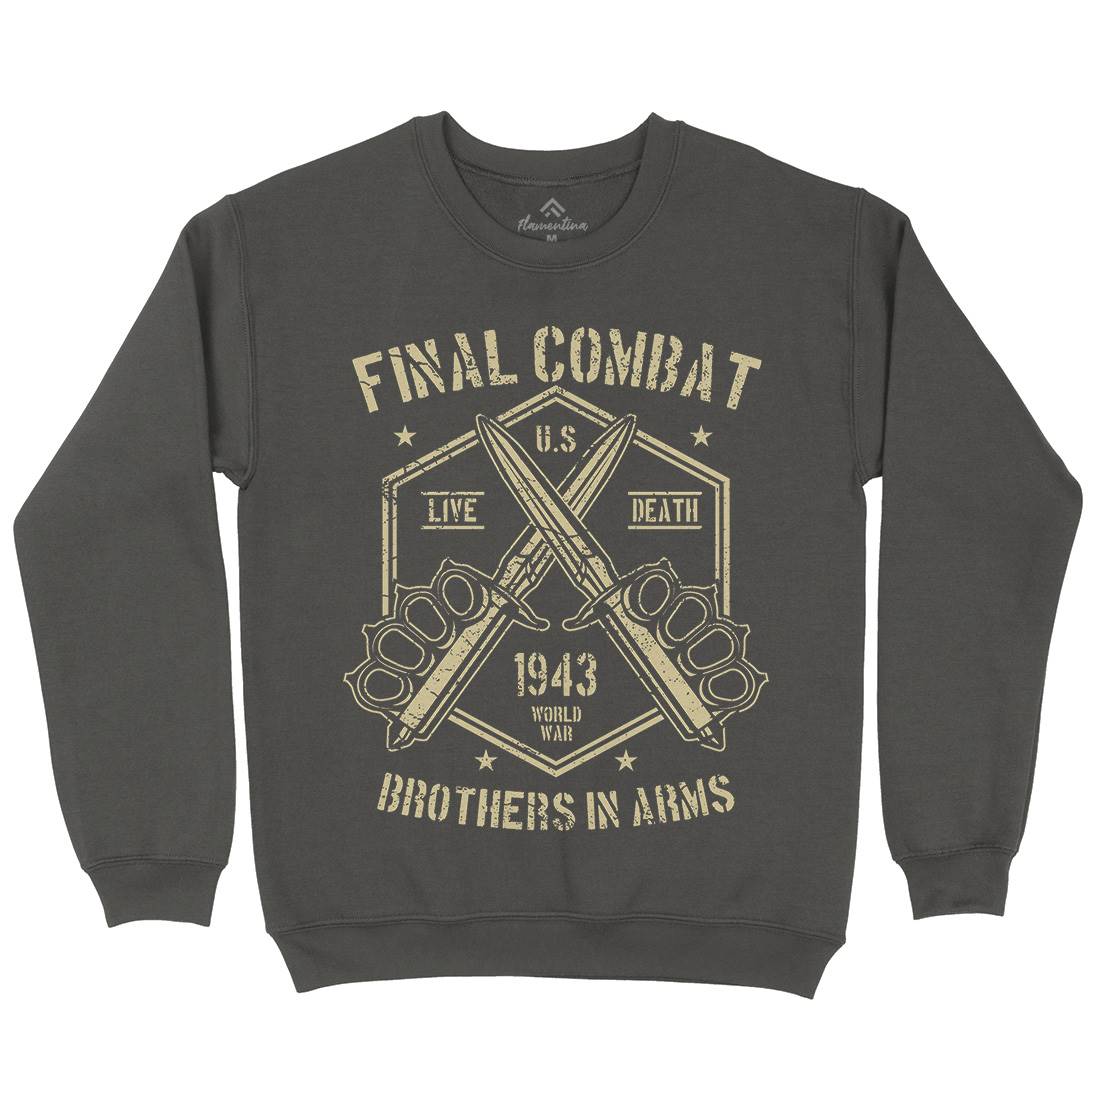 Final Combat Kids Crew Neck Sweatshirt Army A052